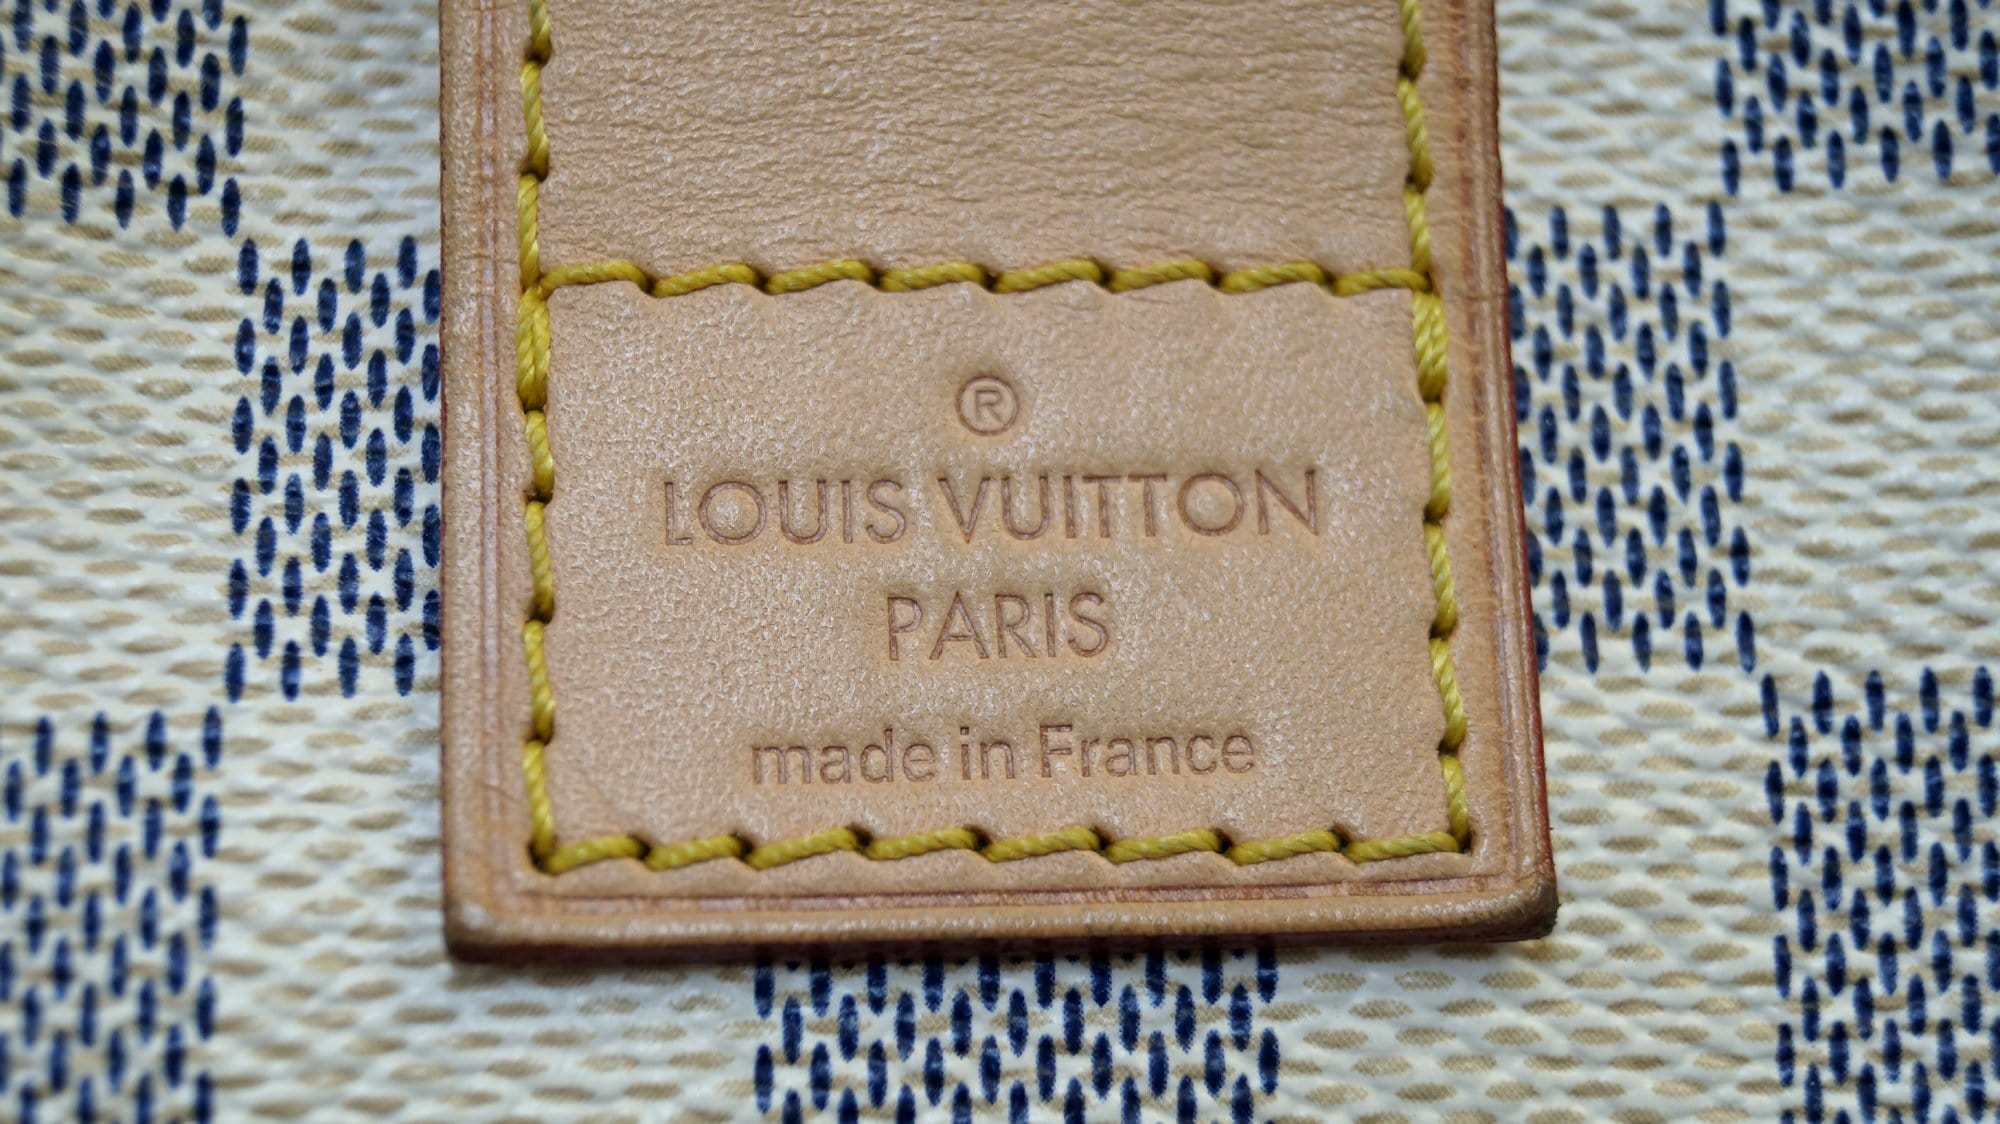 Louis Vuitton Damier Azur Salina GM Shopper Bag White